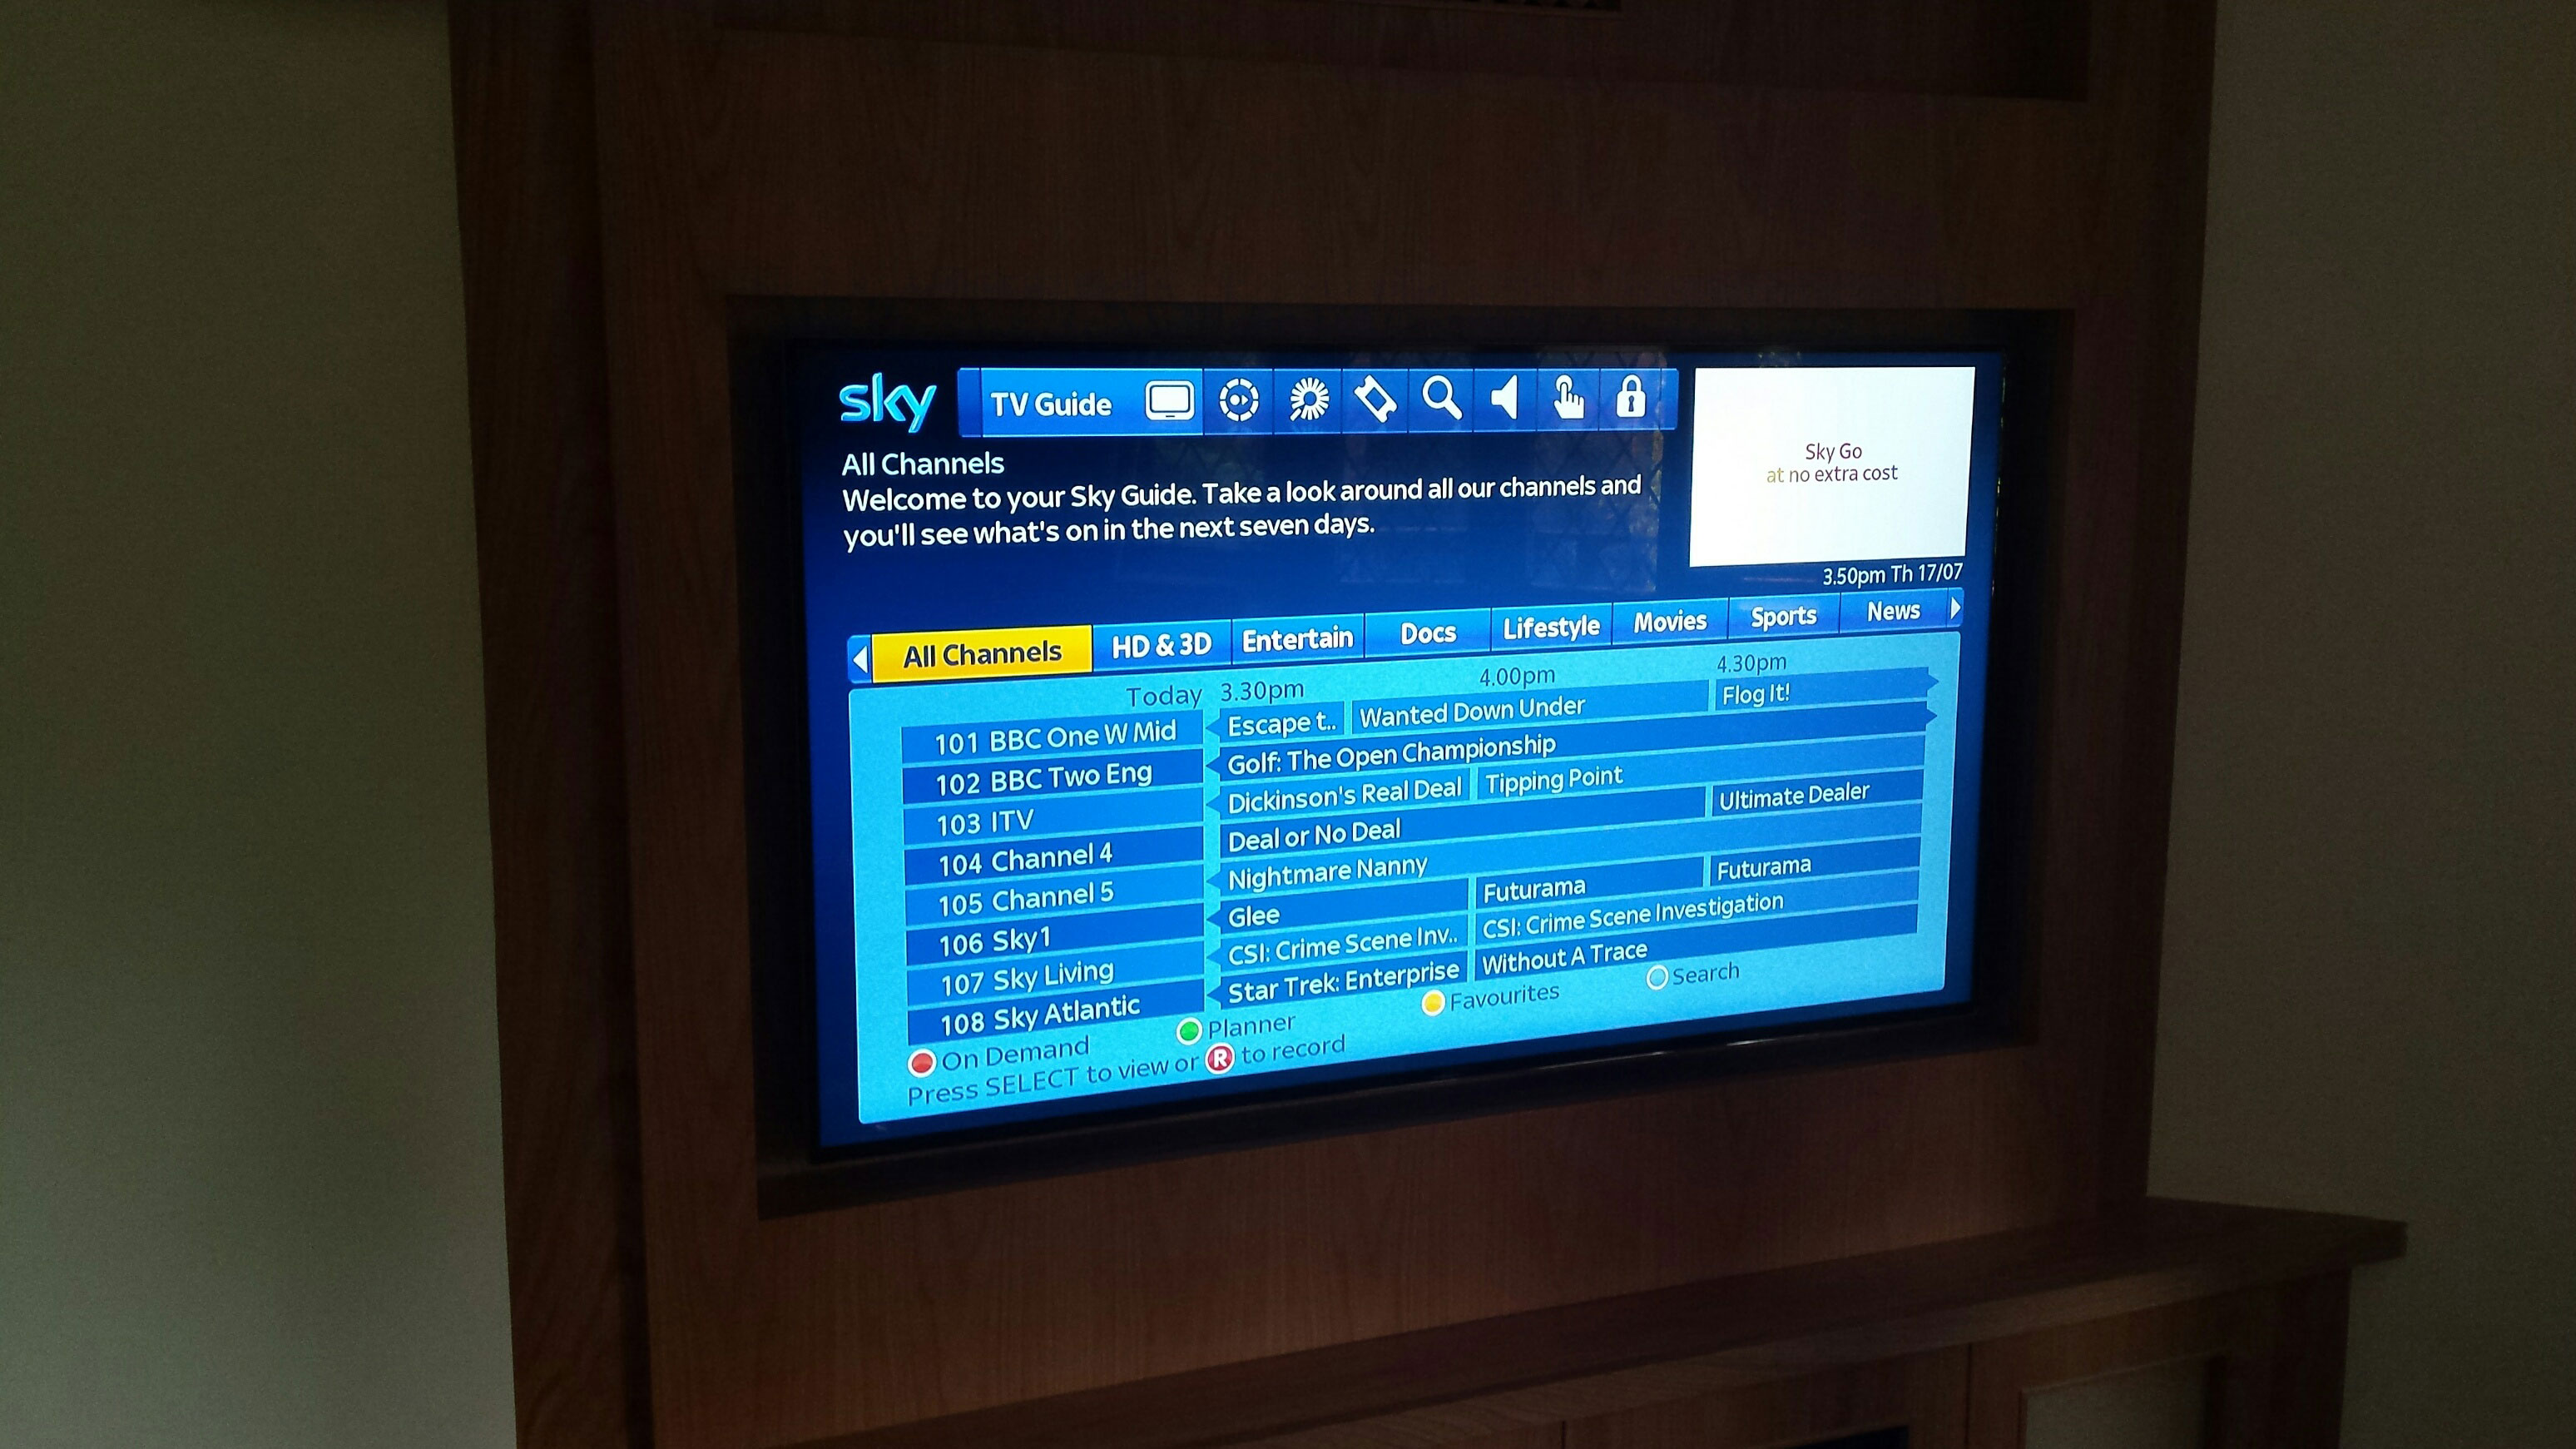 Sky HD on Samsung UE55H7000 flatscreen TV